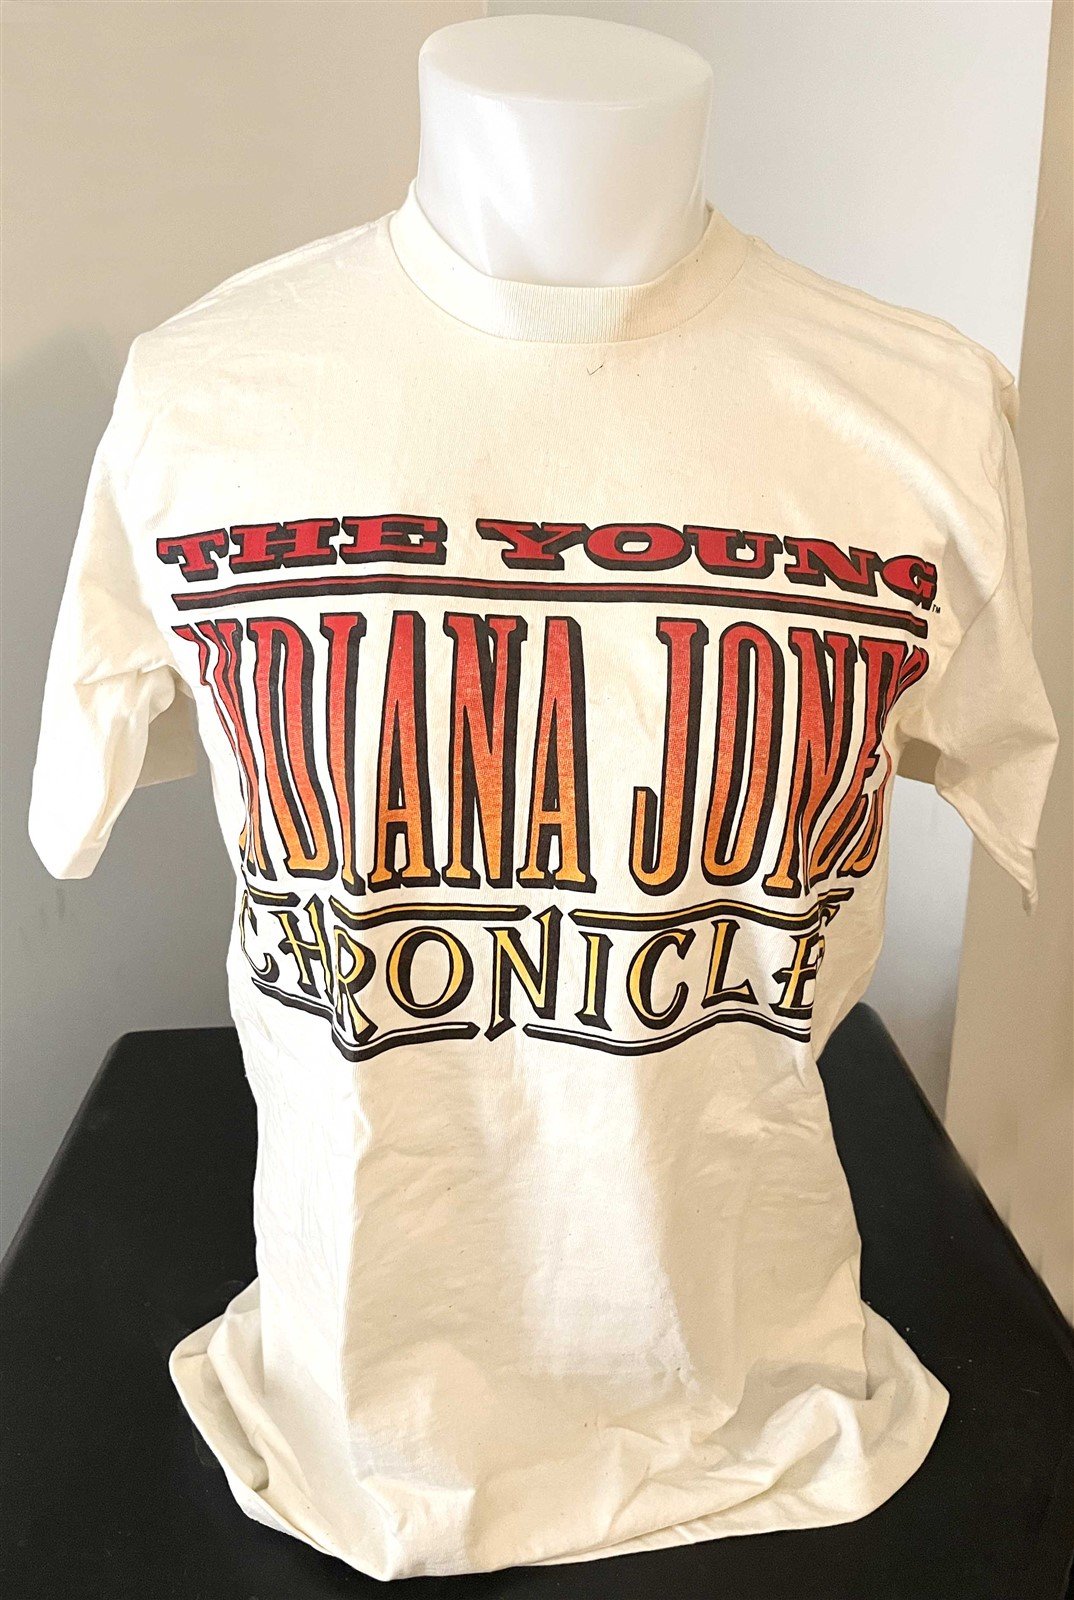 1992 YOUNG INDIANA JONES vintage logo tee shirt size Small